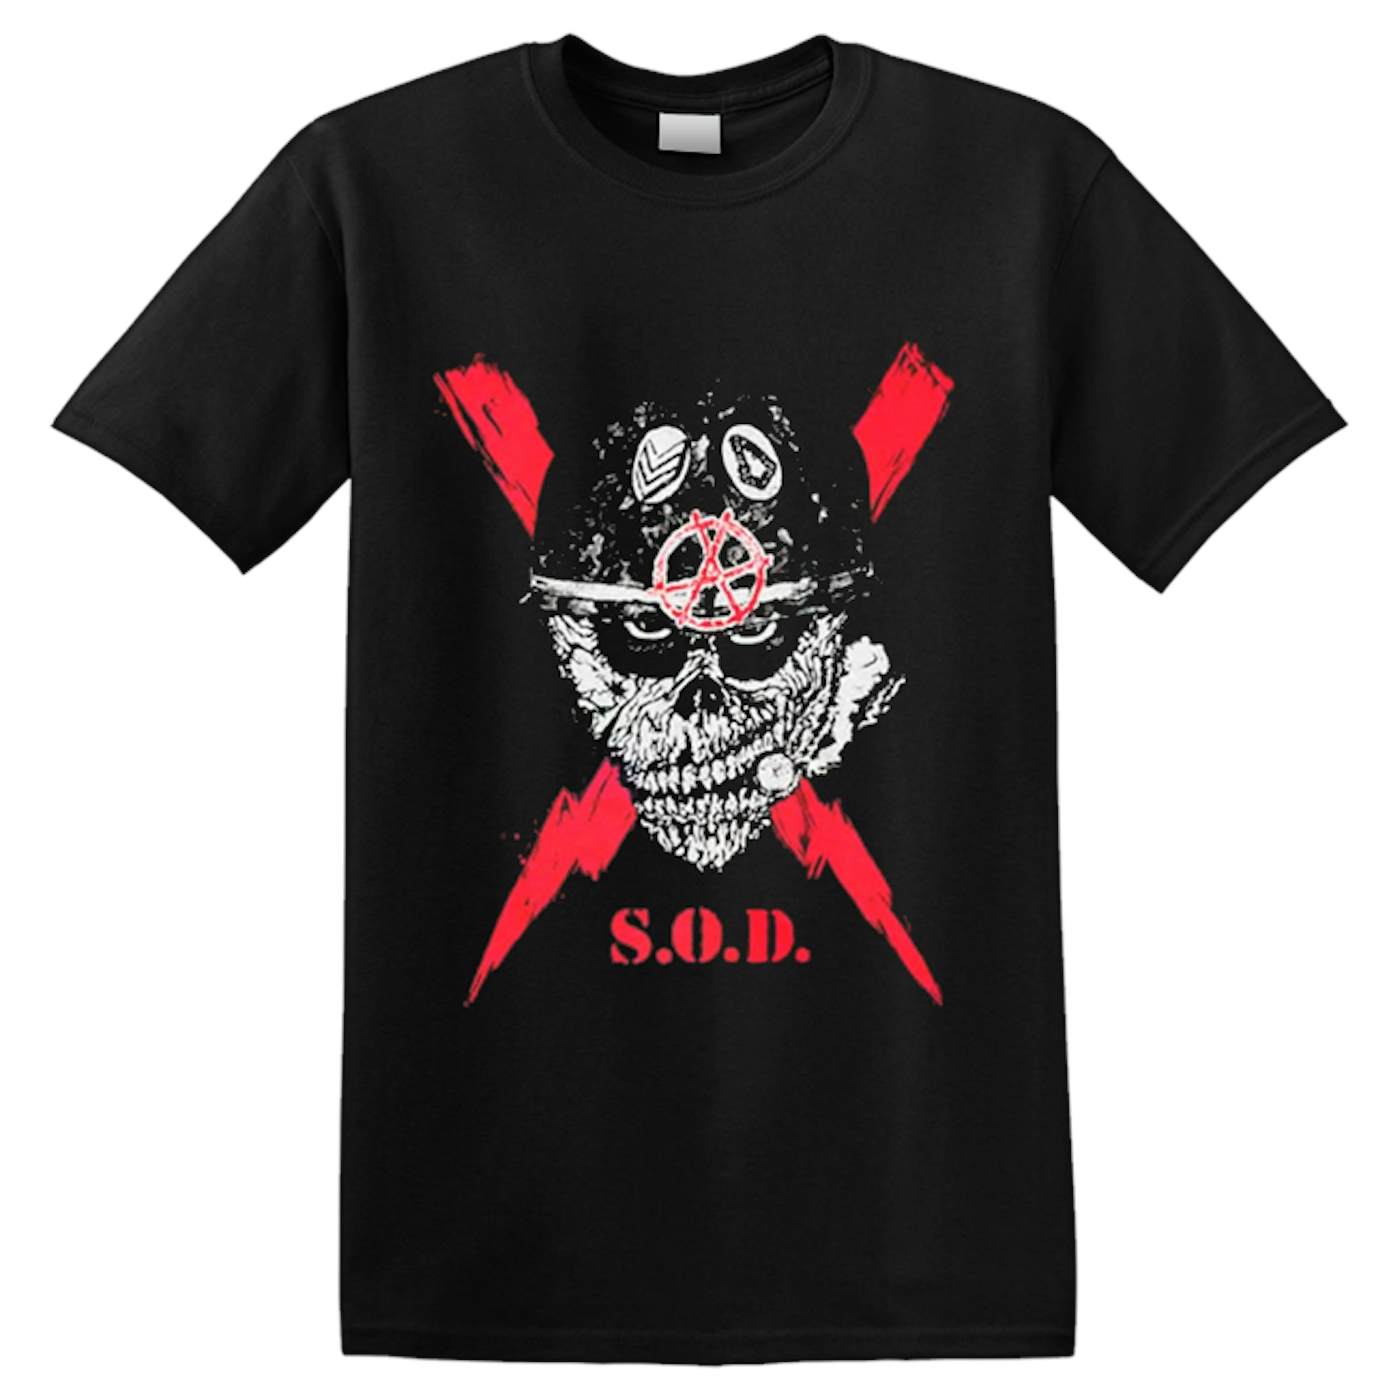 S.O.D. - 'Scrawled Lightning' T-Shirt